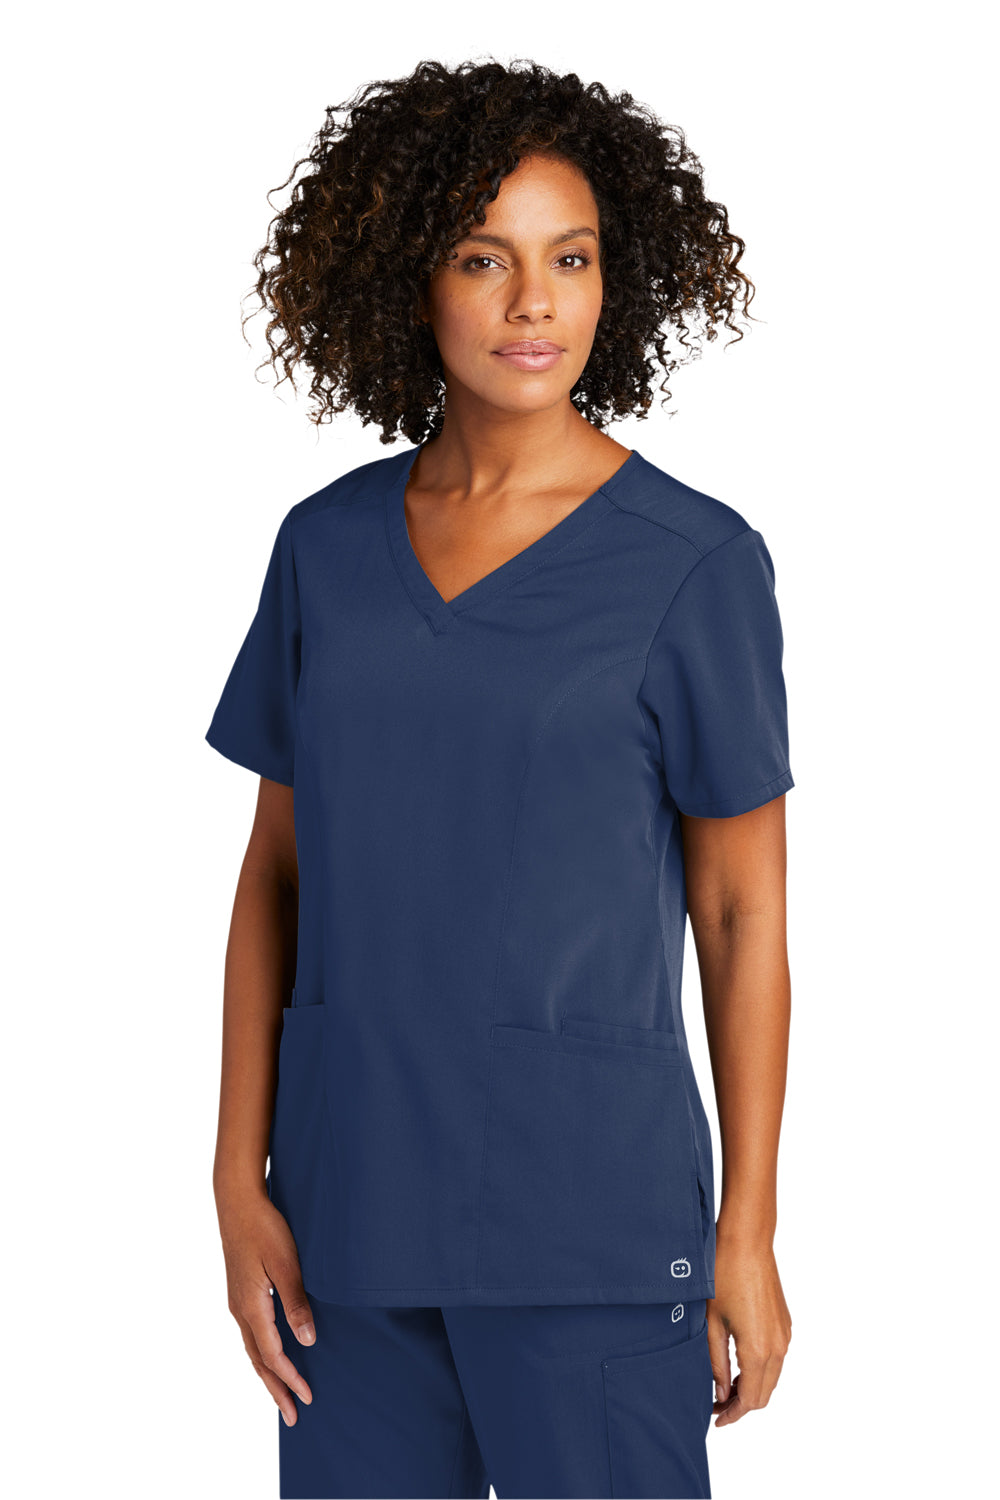 Wonderwink WW4168 Premiere Flex Short Sleeve V-Neck Shirt w/ Pockets Navy Blue 3Q